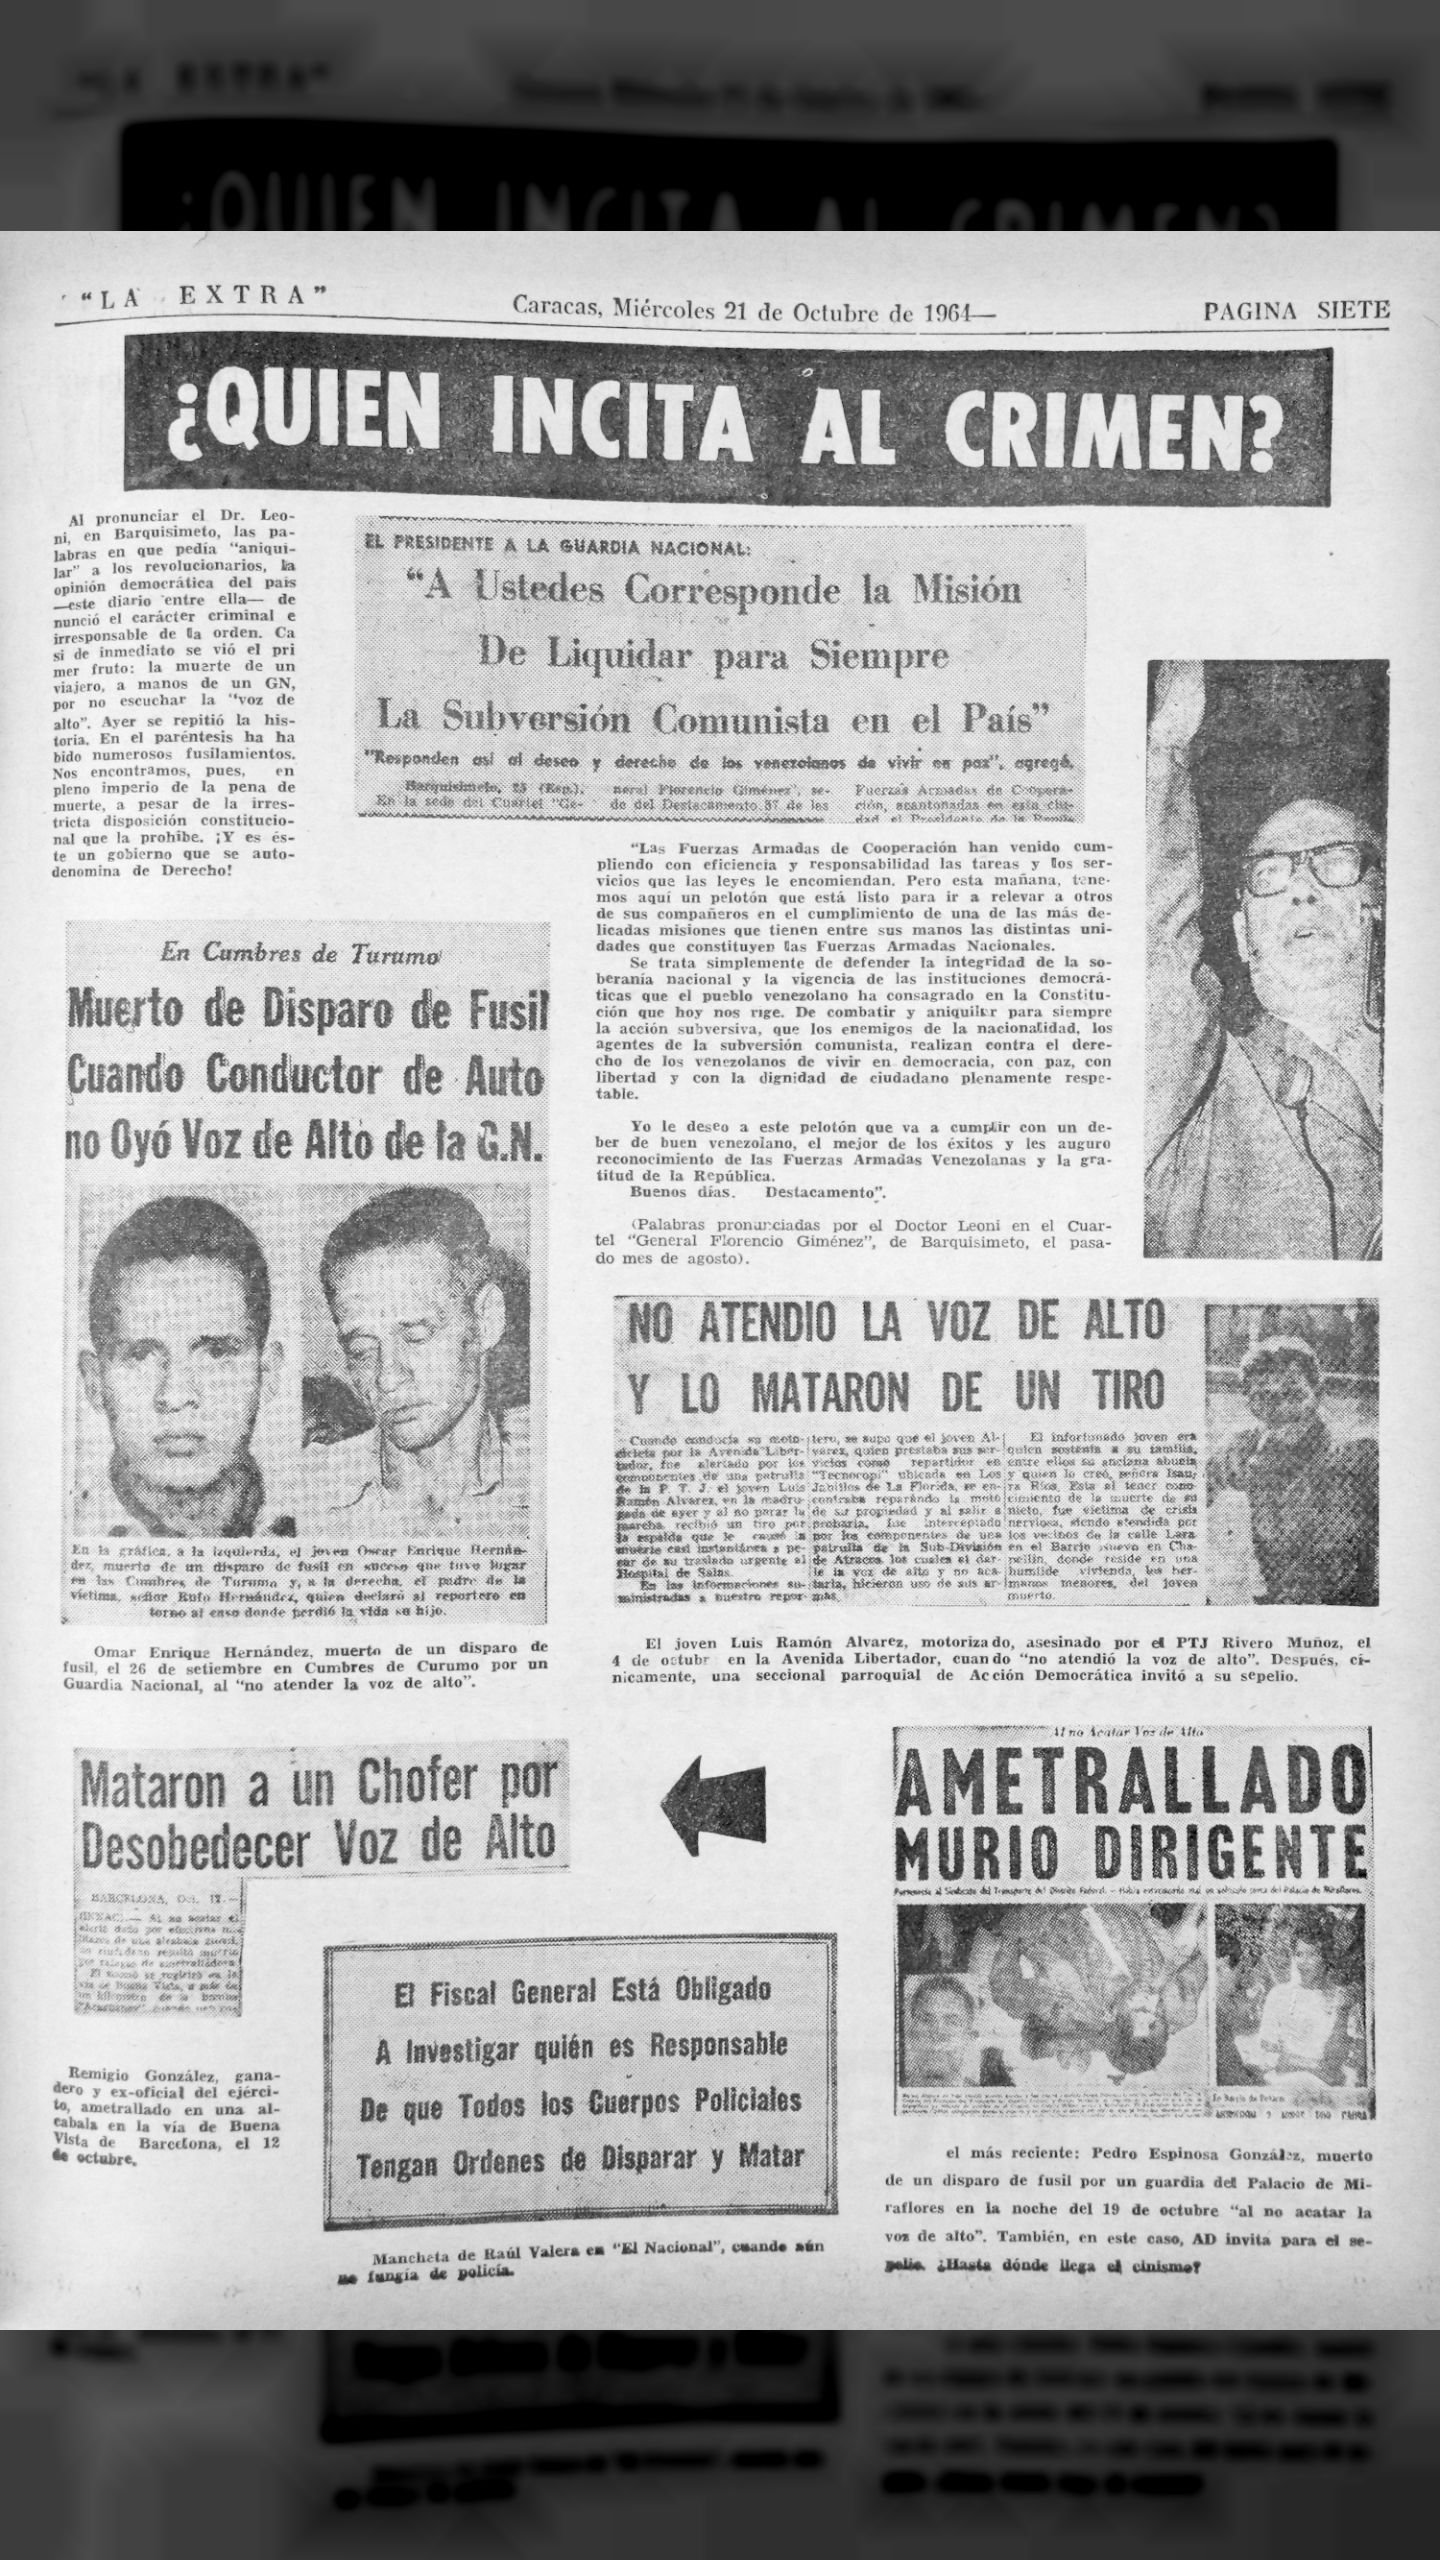 Raúl Leoni ordena liquidar comunistas para siempre ¿Quién incita al crimen? (La Extra, 21 de octubre 1964)